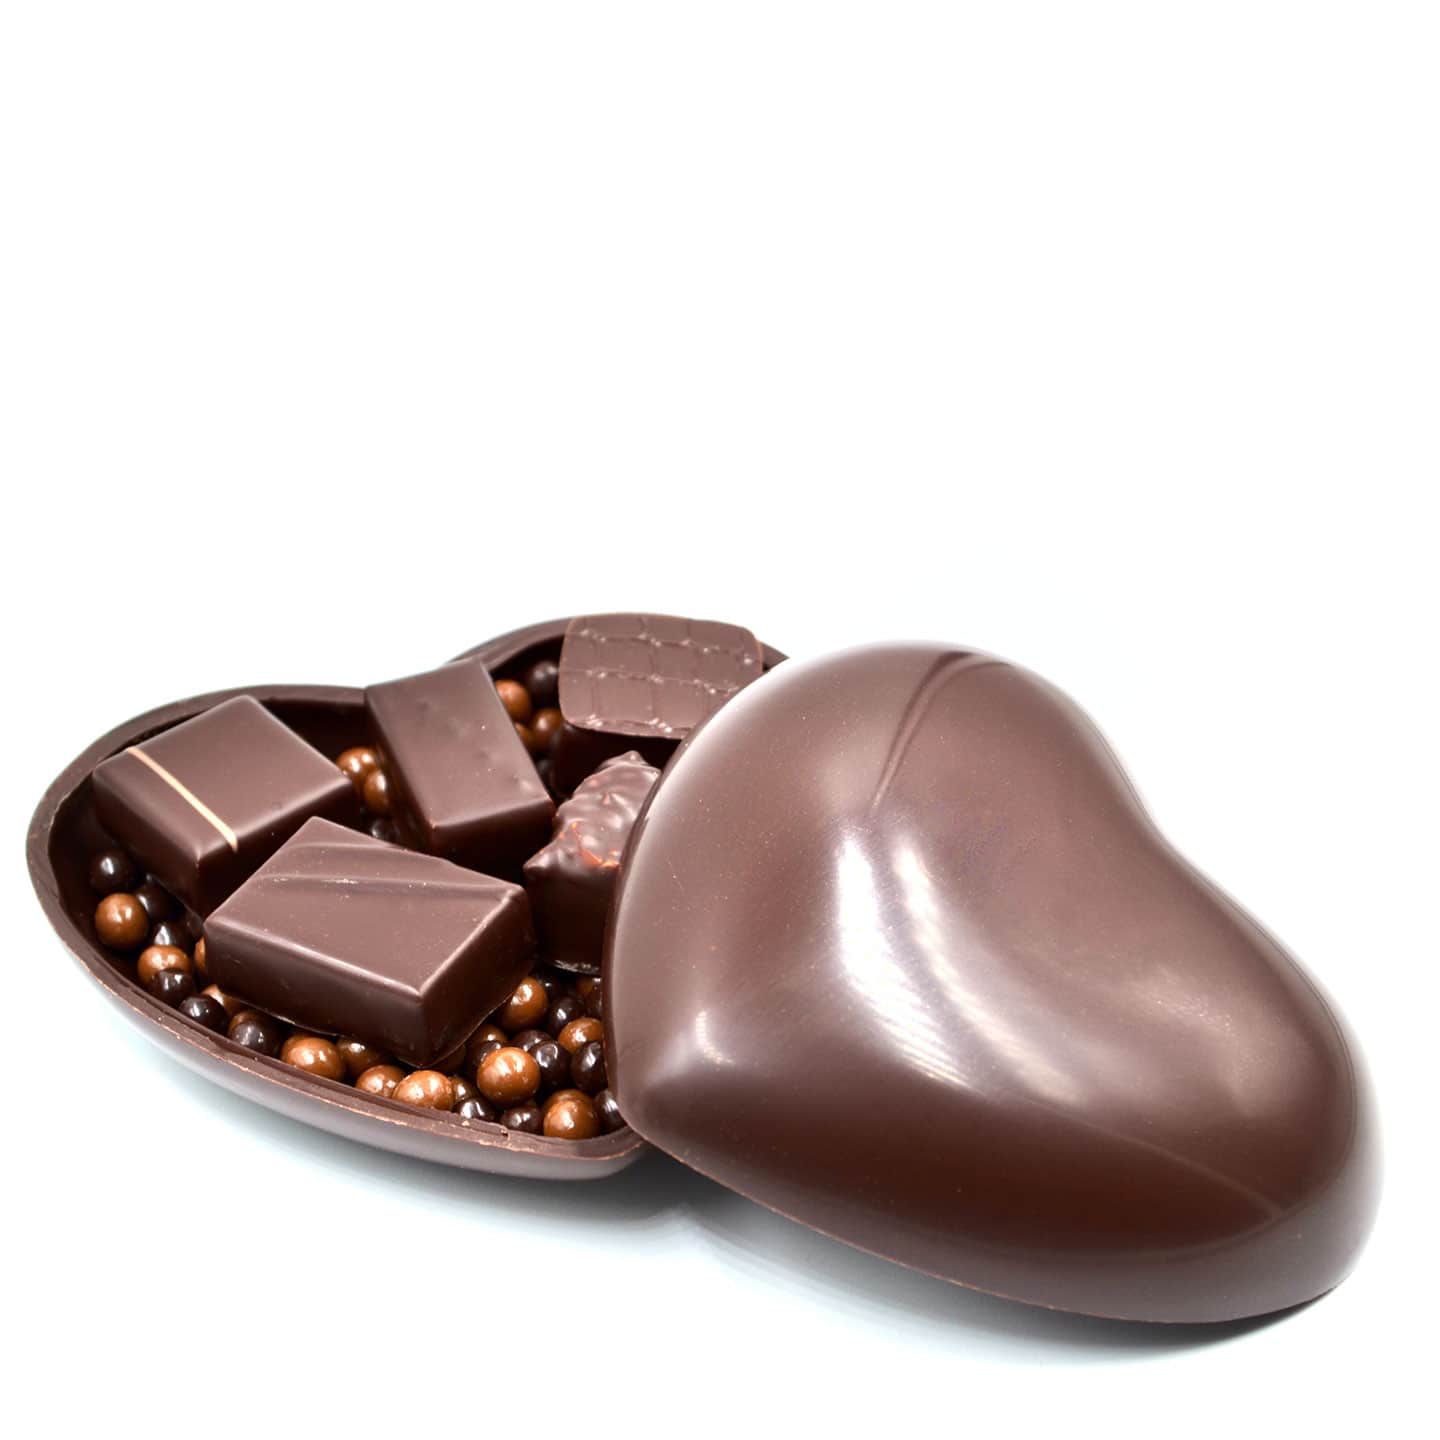 Coeur Garni Pralinés, Ganaches et Perles Chocolat St Valentin 130g